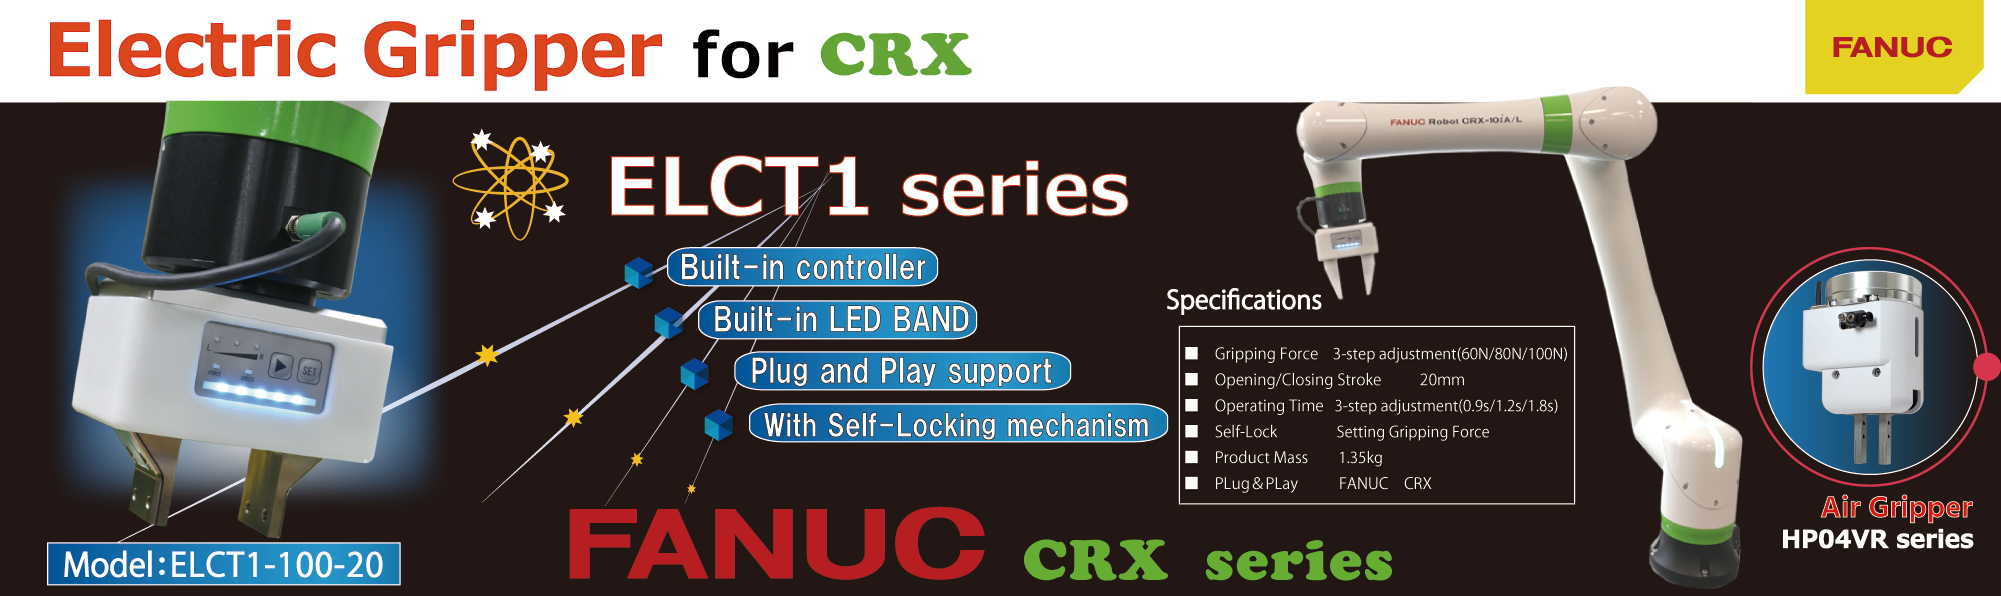 Electric gripper for FANUC CRX series